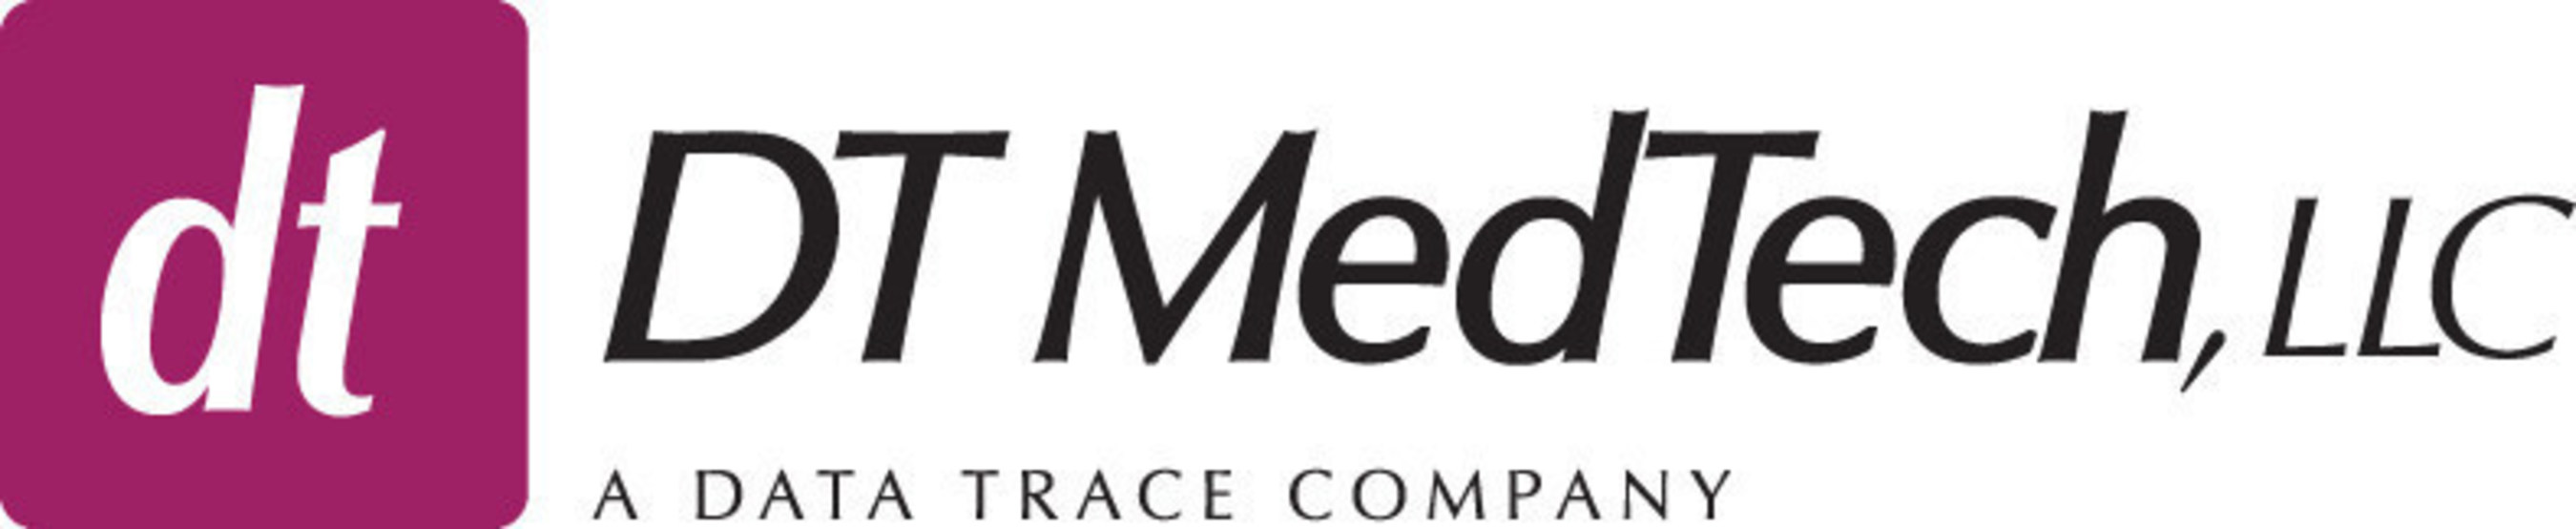 DT MedTech, LLC logo